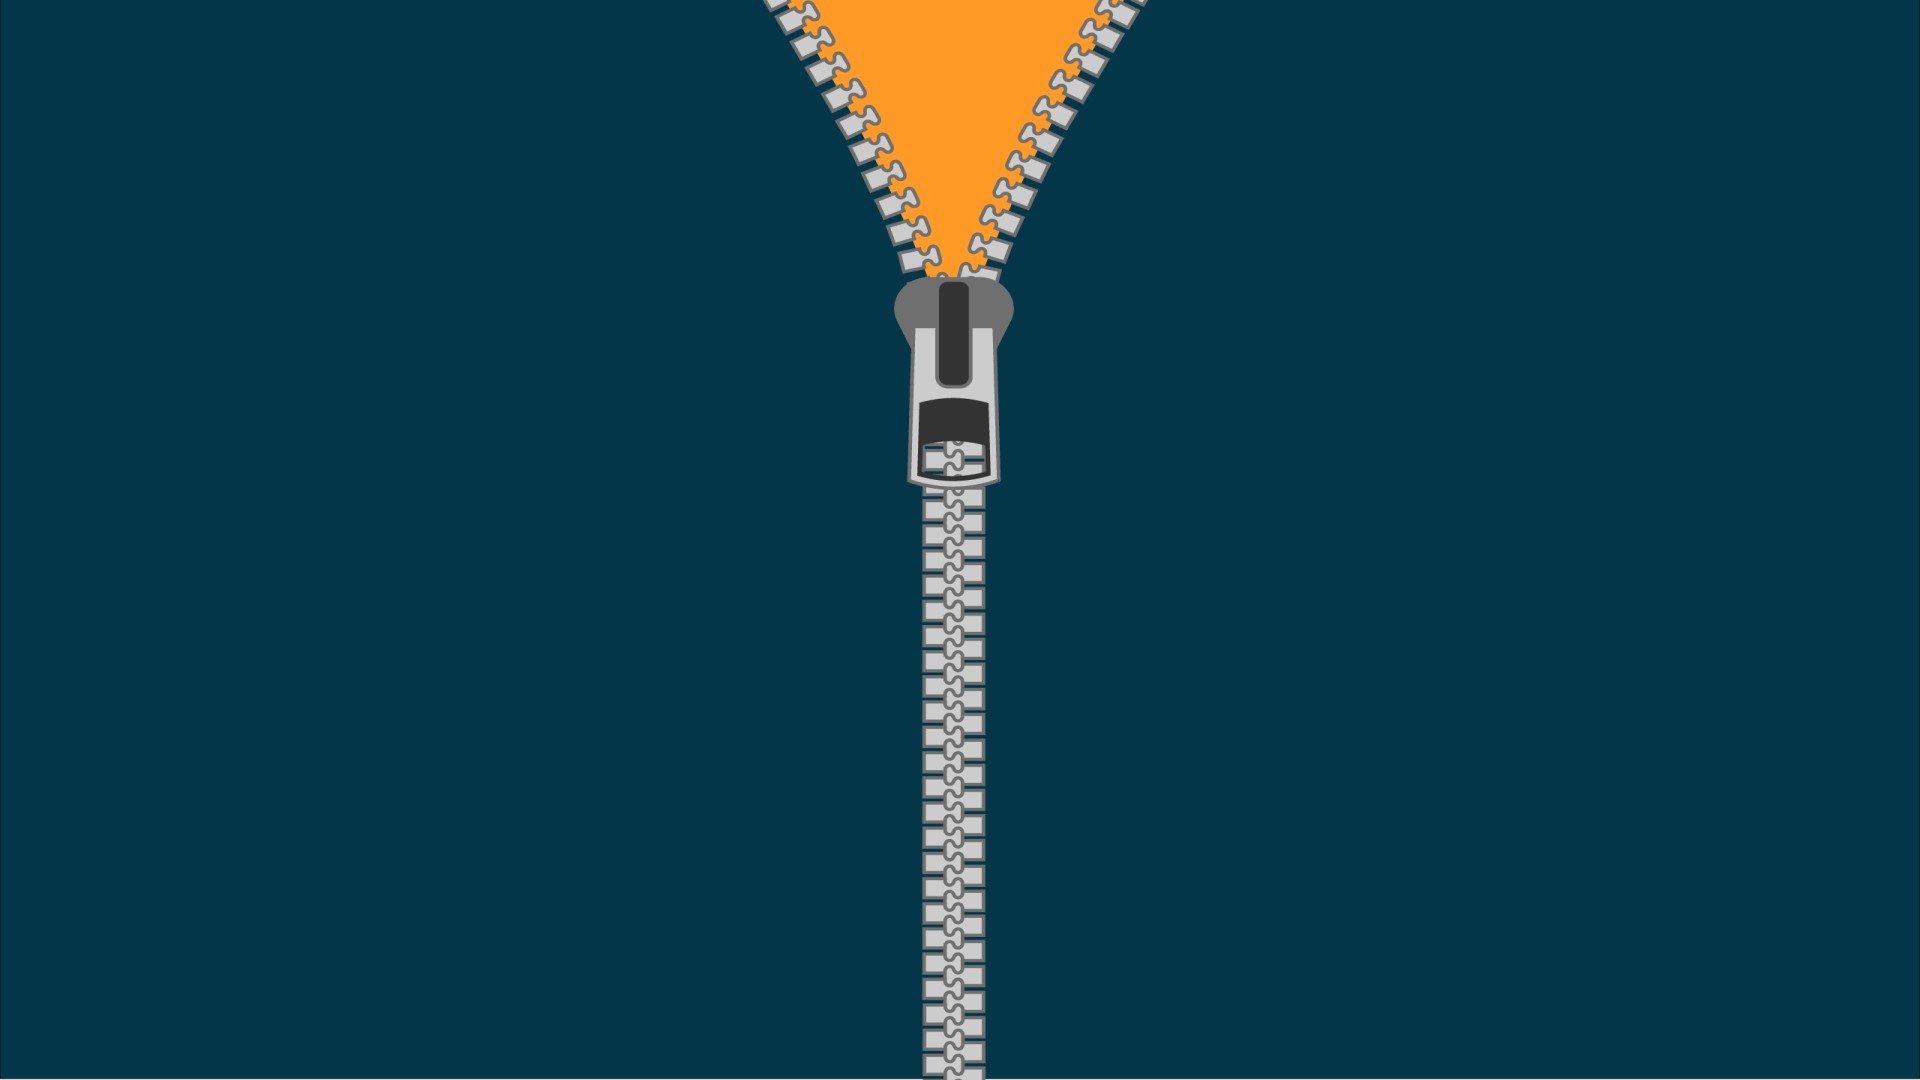 General 1920x1080 zipper artwork blue orange blue background simple background minimalism